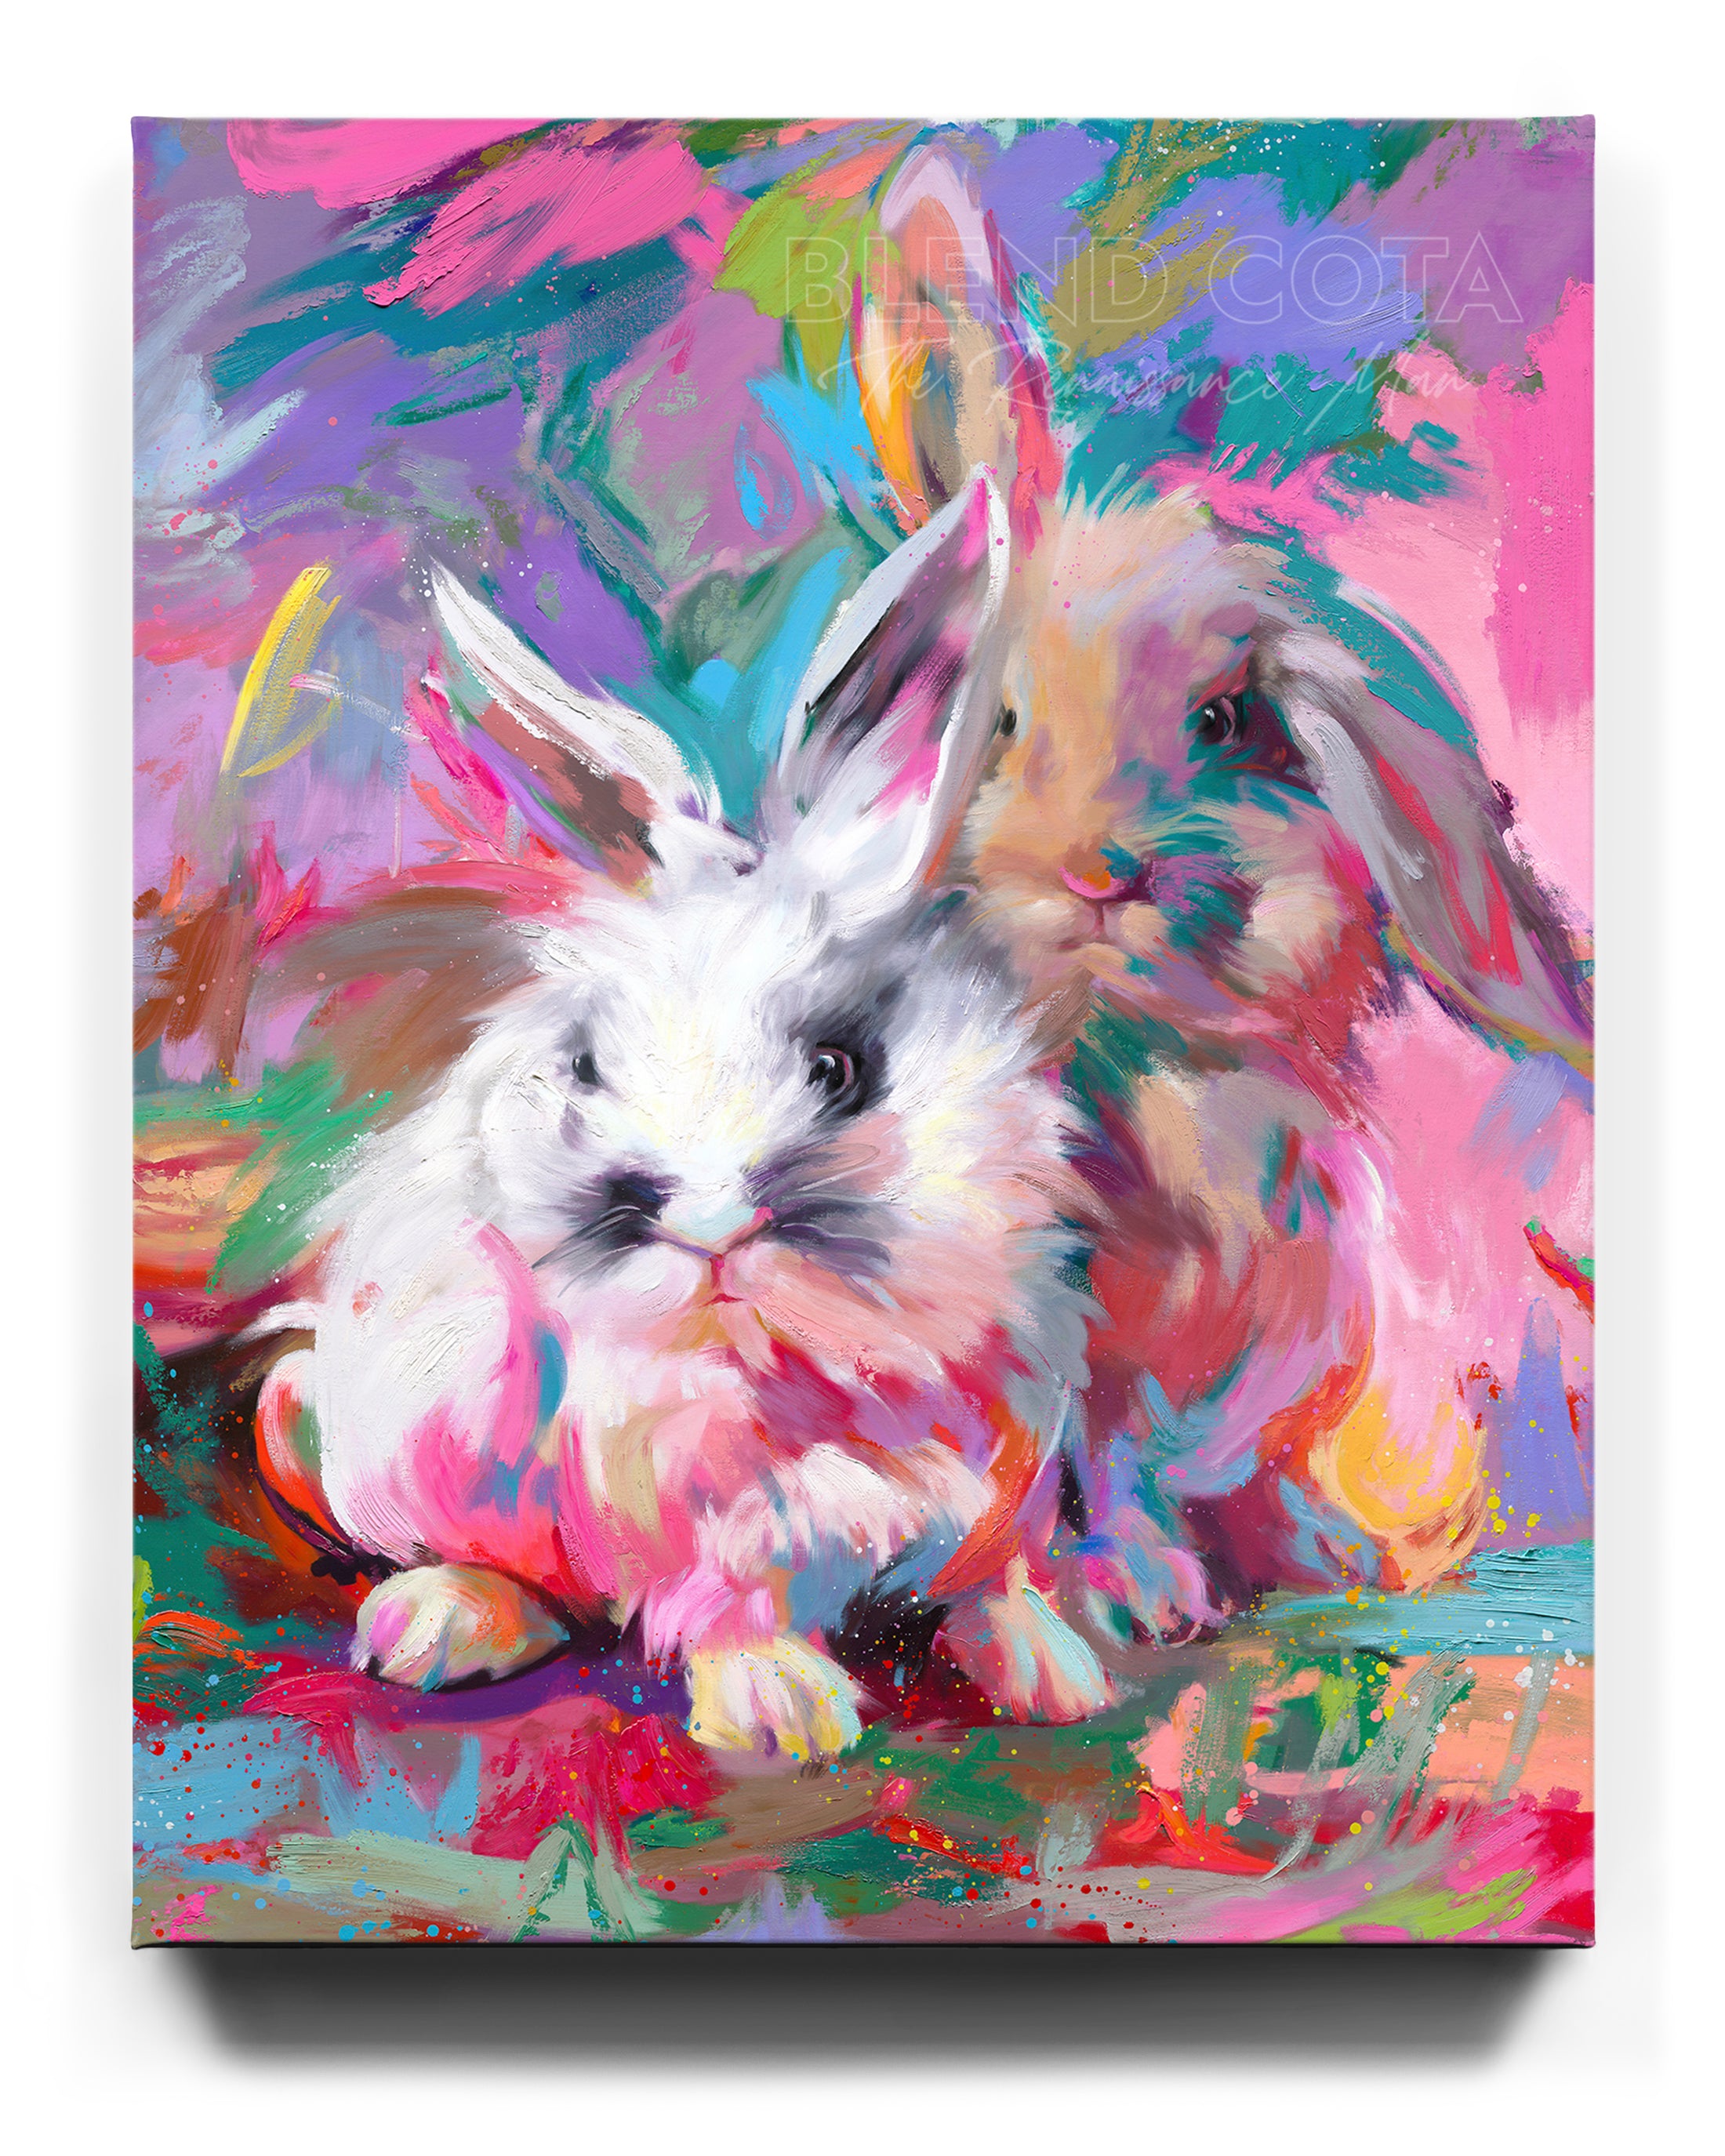 Fluffy Buns - Blend Cota Limited Edition Art on Canvas - Blend Cota Studios